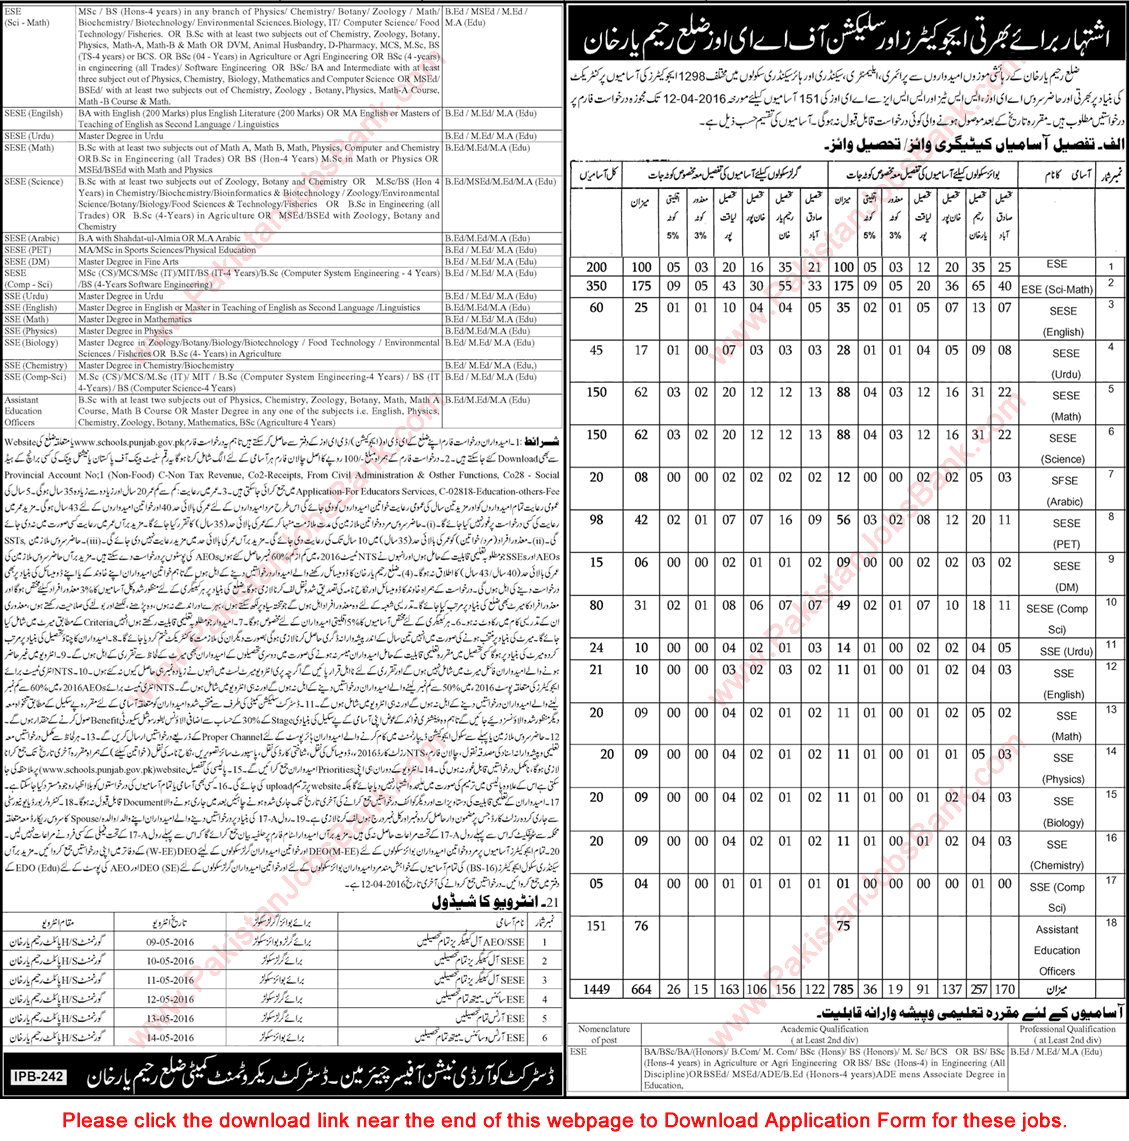 Rahim Yar Khan School Education Department Jobs 2016 March Educators & AEO Application Form Latest